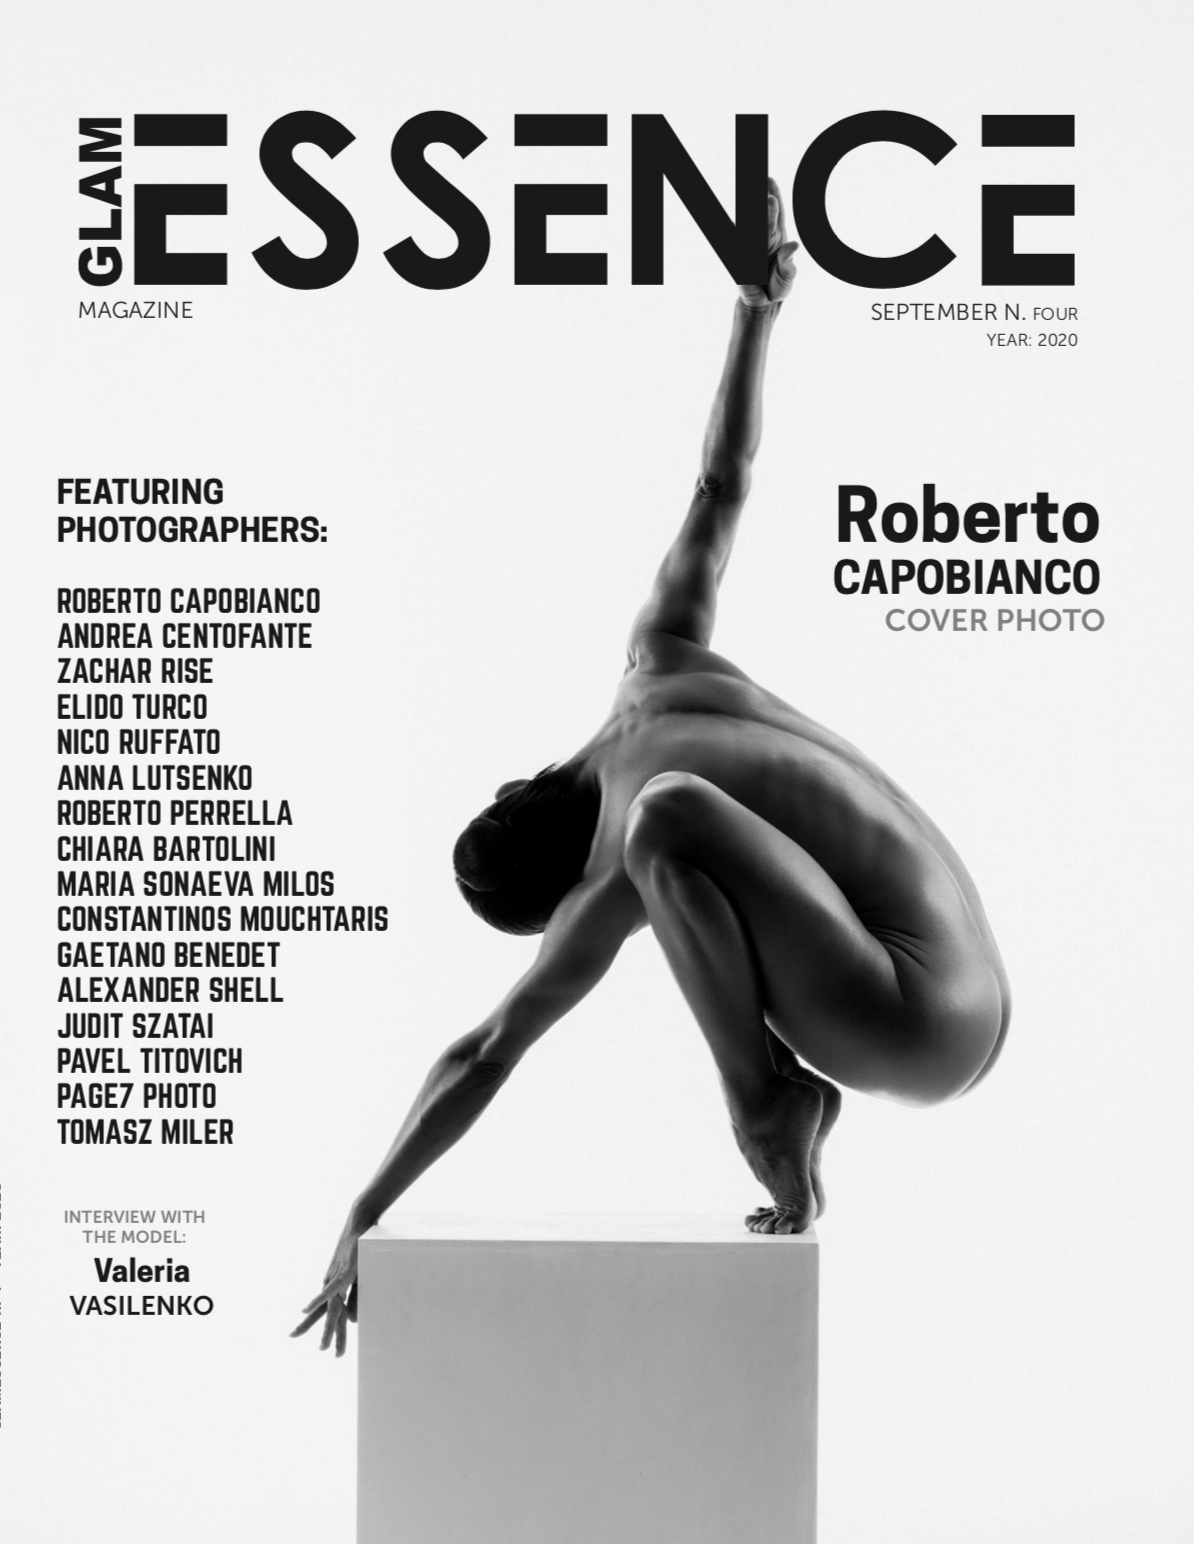 Glam Essence Magazine September 2020 - Cover by Roberto Capobianco